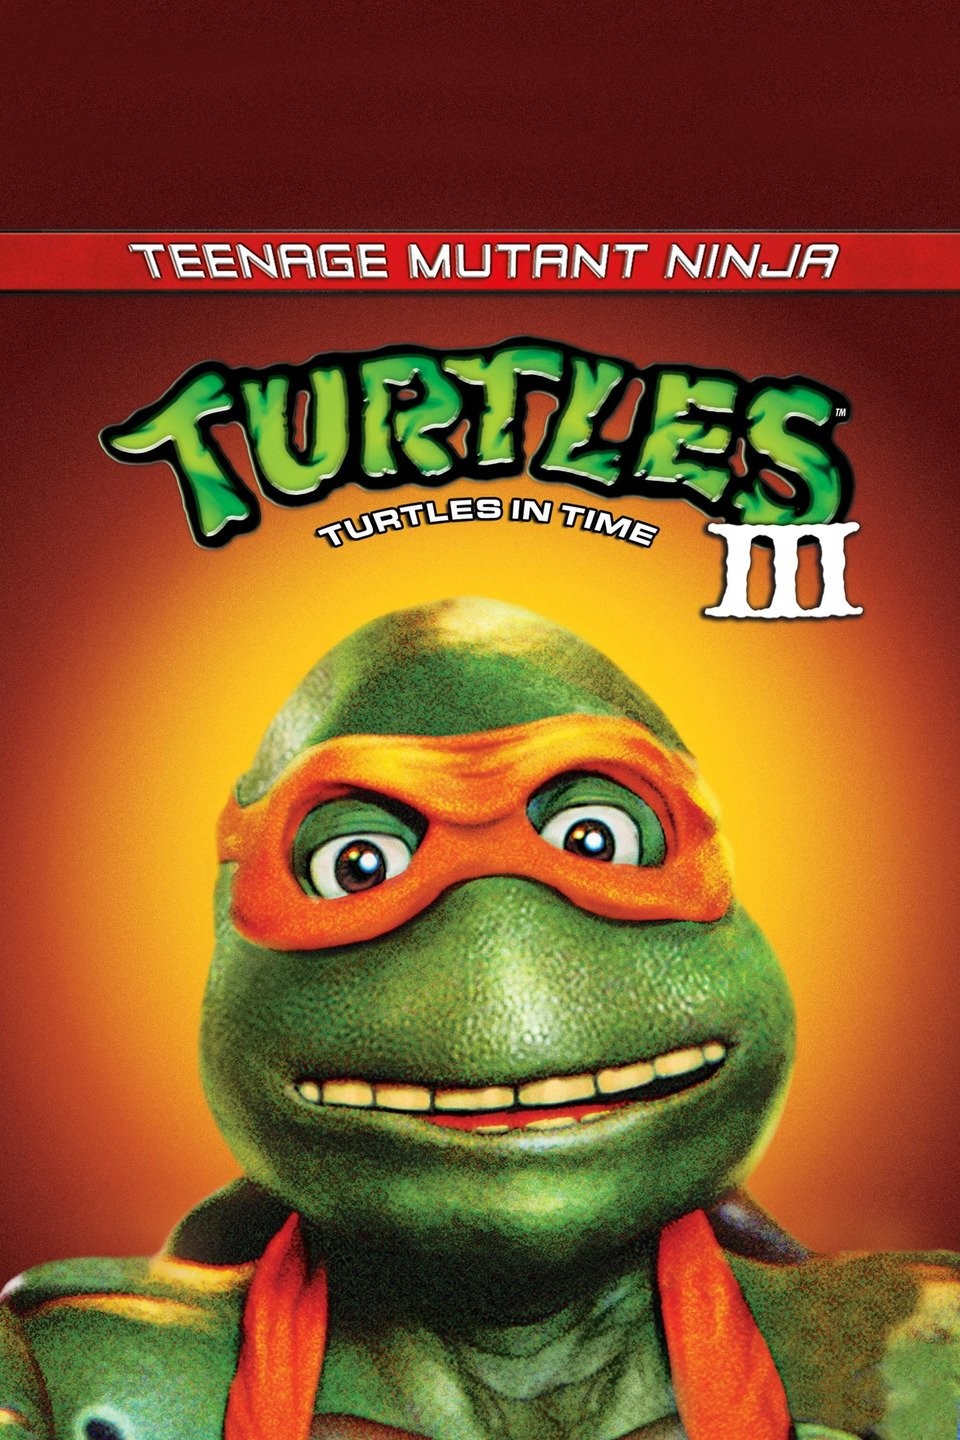 Donatello 1990's Ninja Turtles Trilogy (Golden Harvest)